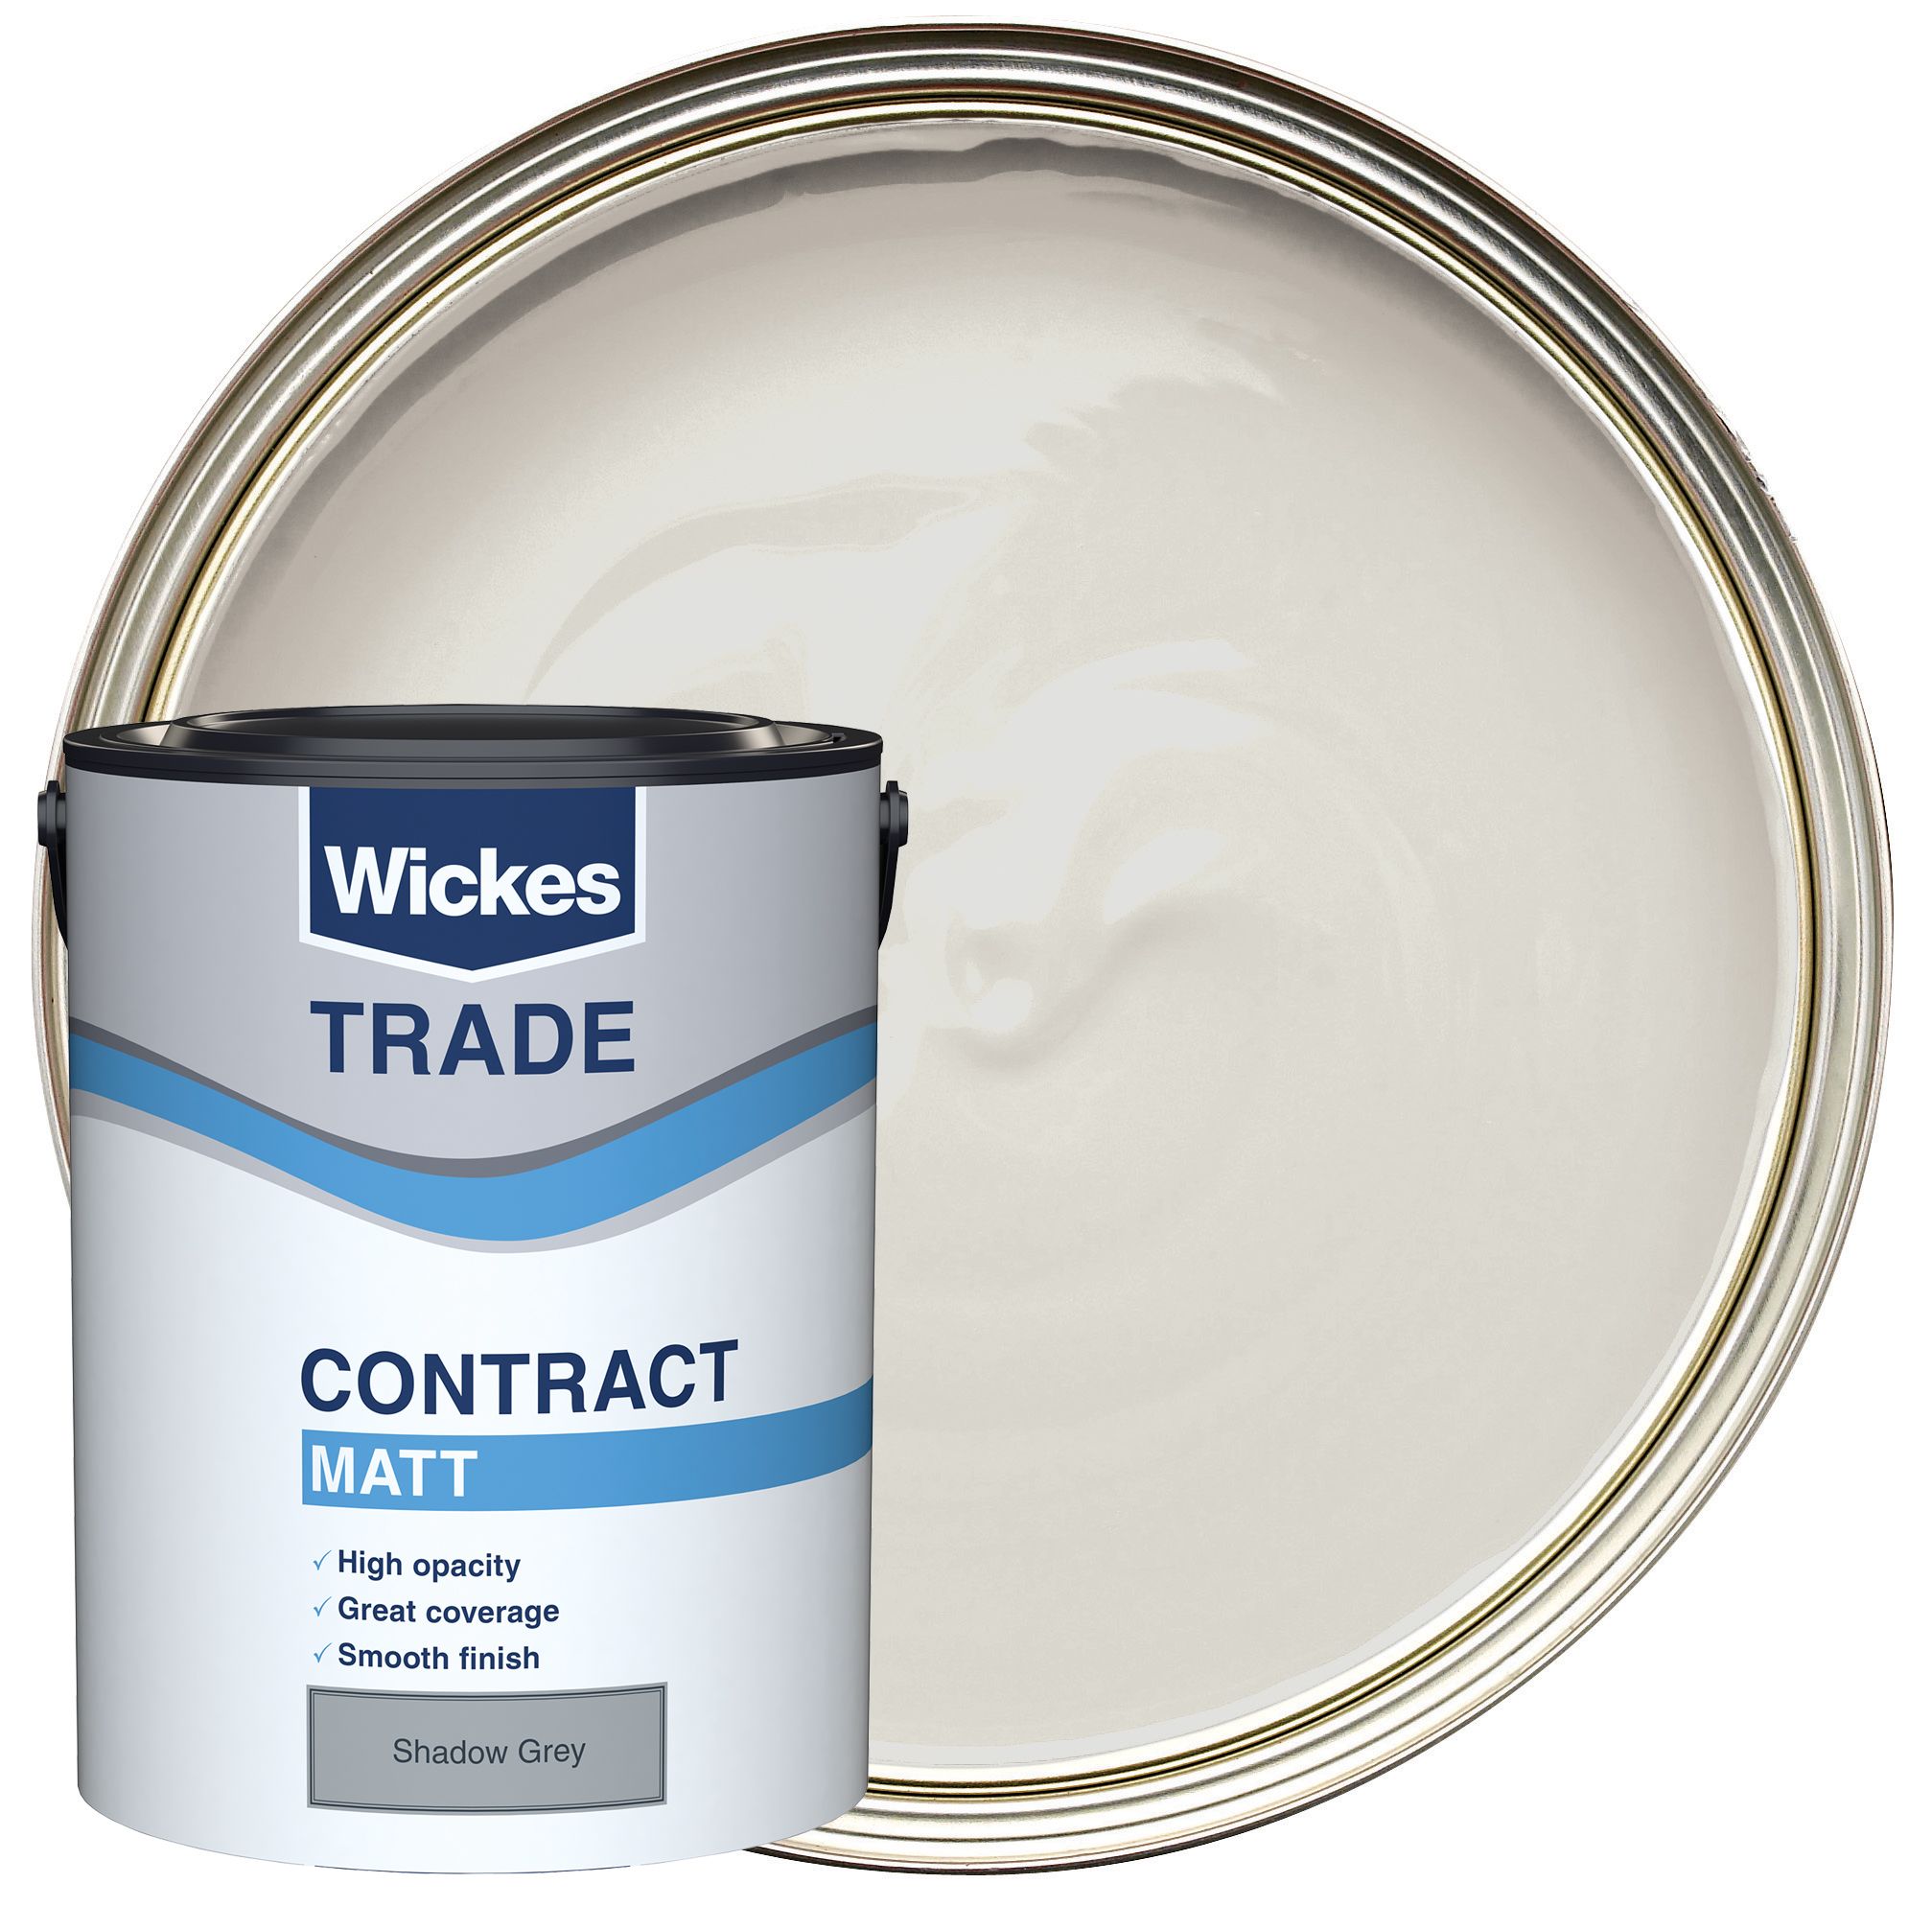 Wickes Trade Contract Matt Emulsion Paint - Shadow Grey - 5L